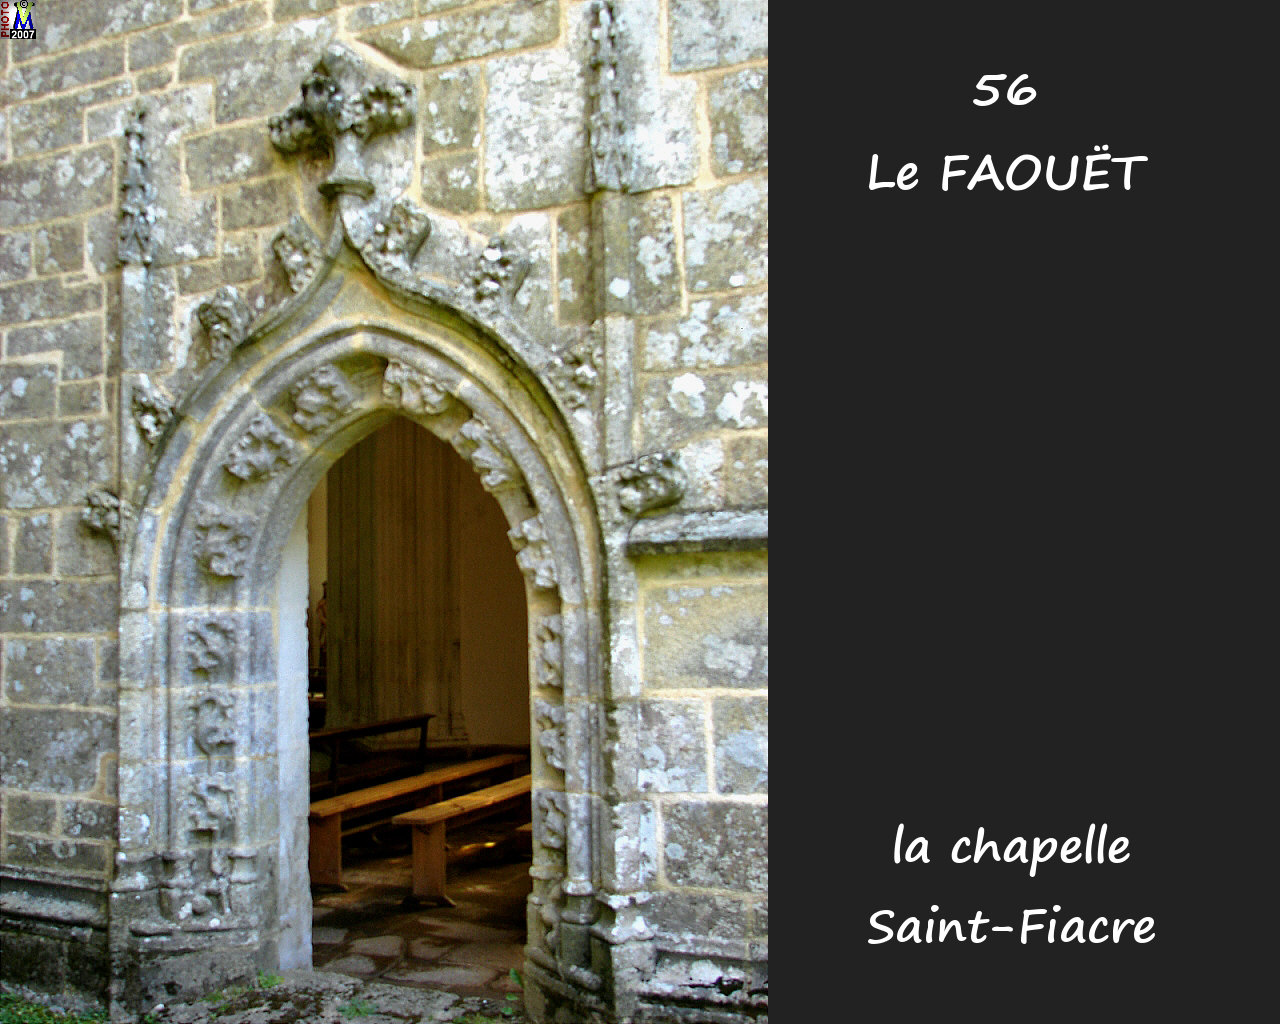 56FAOUET_chapelle-fiacre_124.jpg